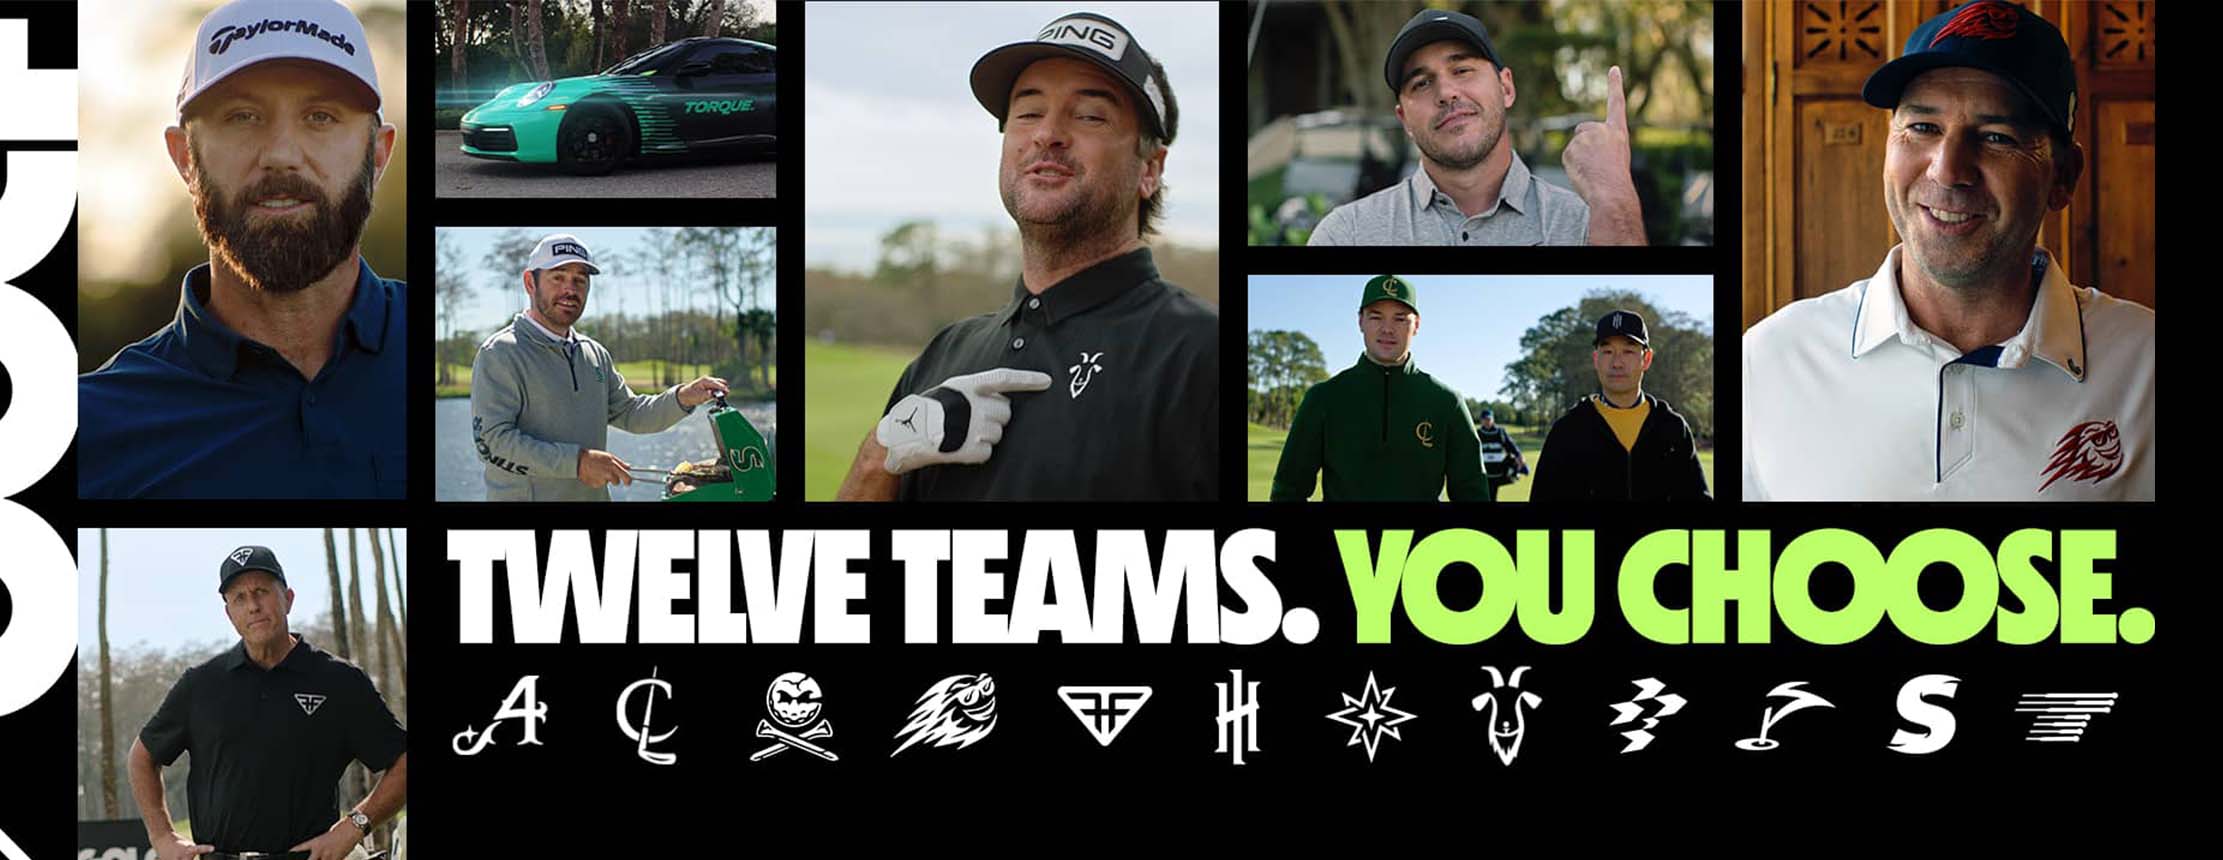 12-Teams_You-Choose-Captains-LIV-Golf